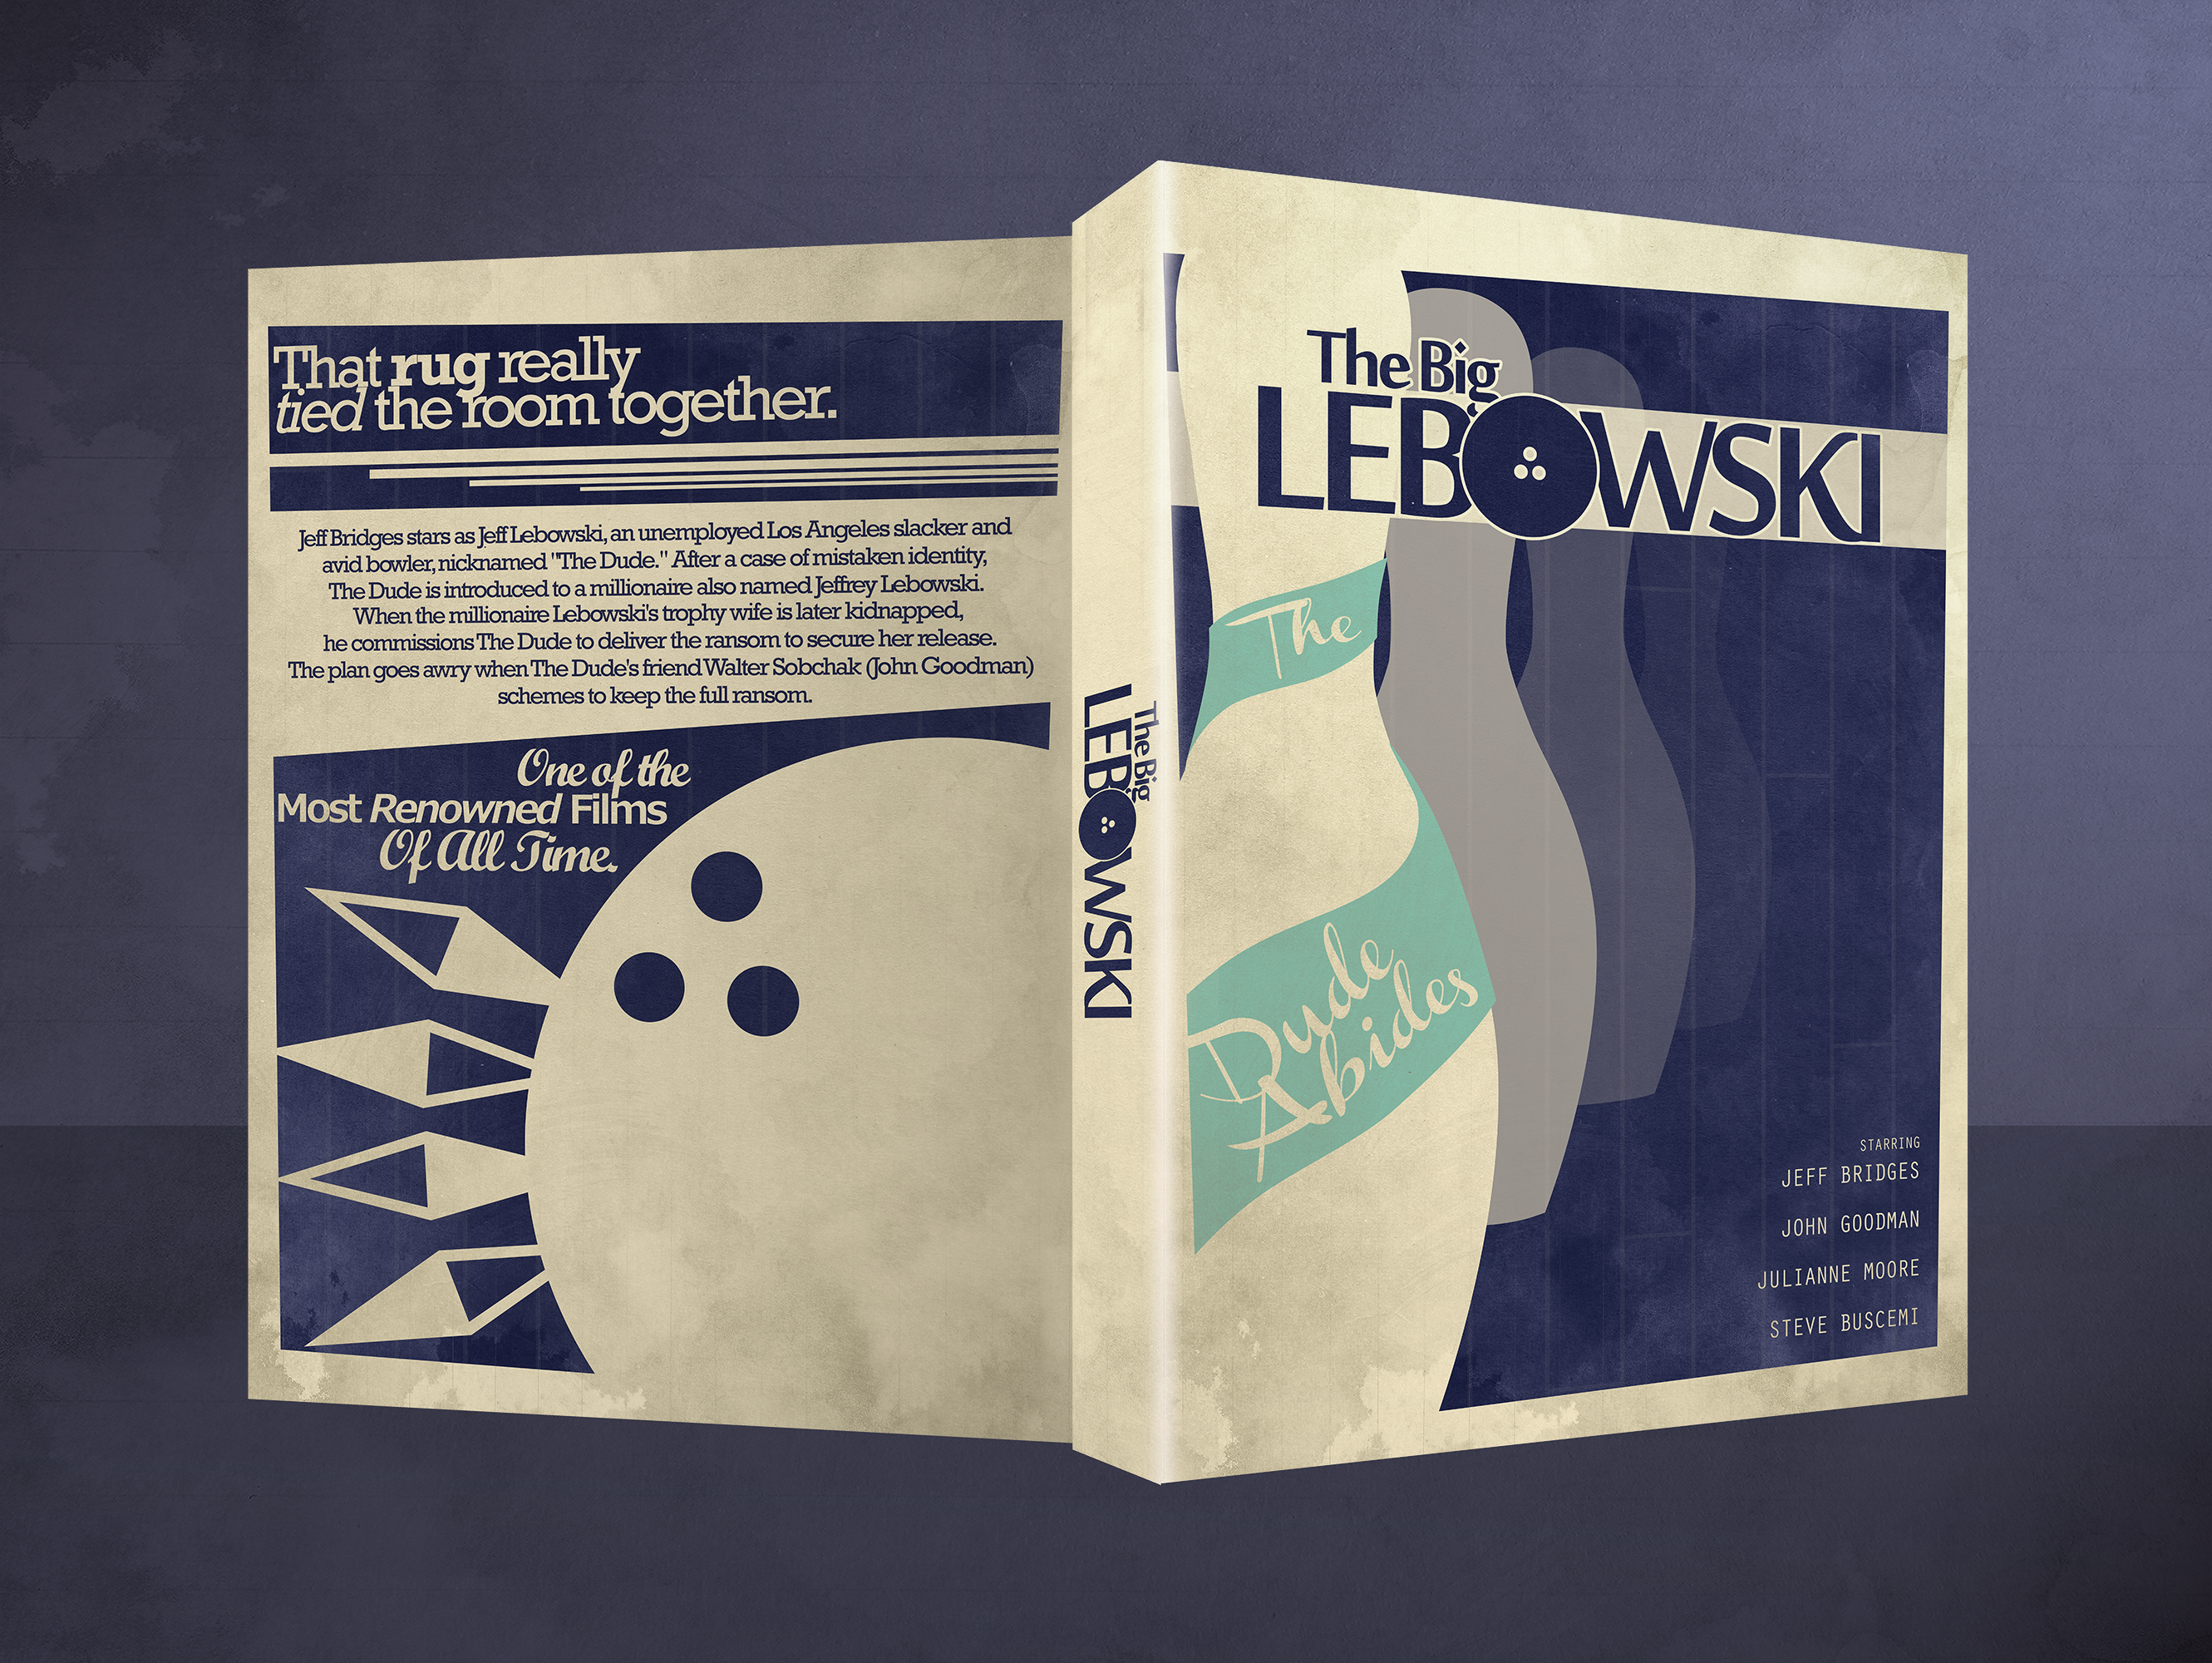 The Big Lebowski box cover